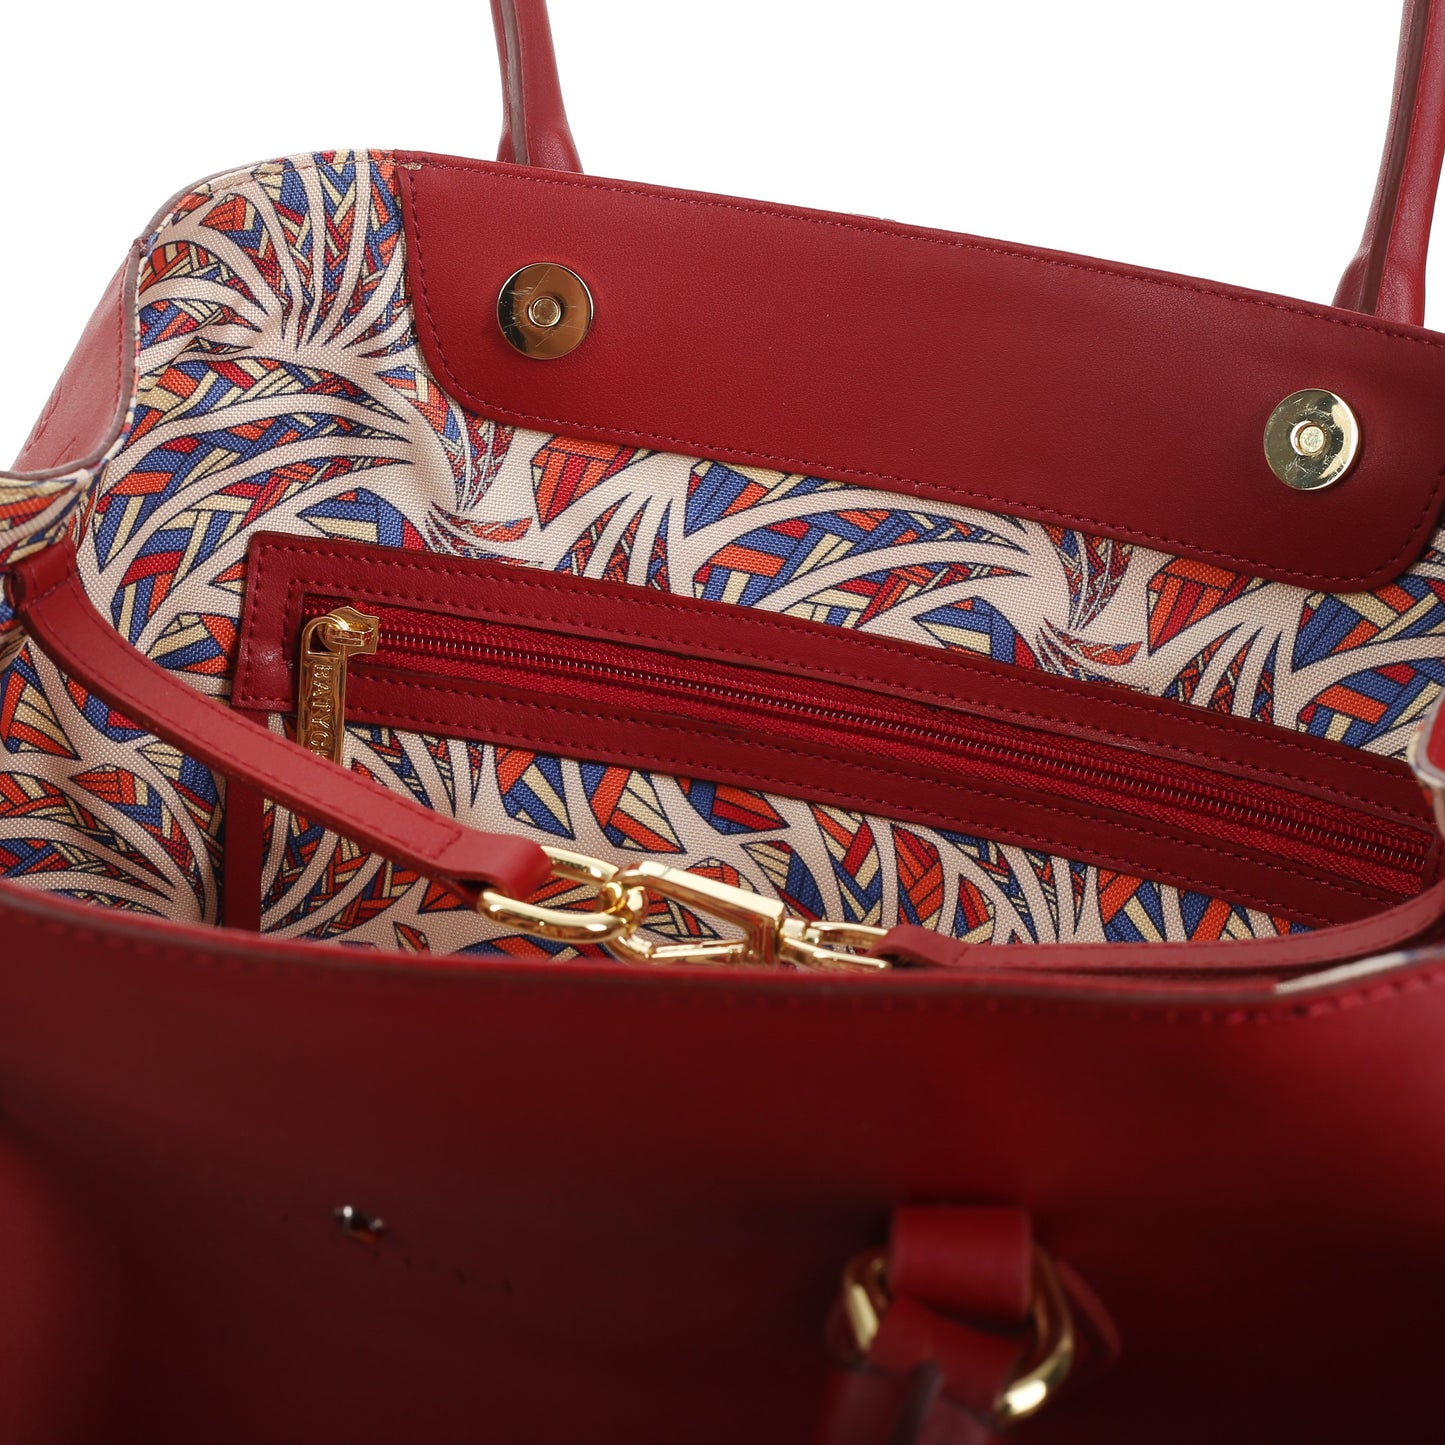 MAMMA NAPA CLARET women's leather handbag